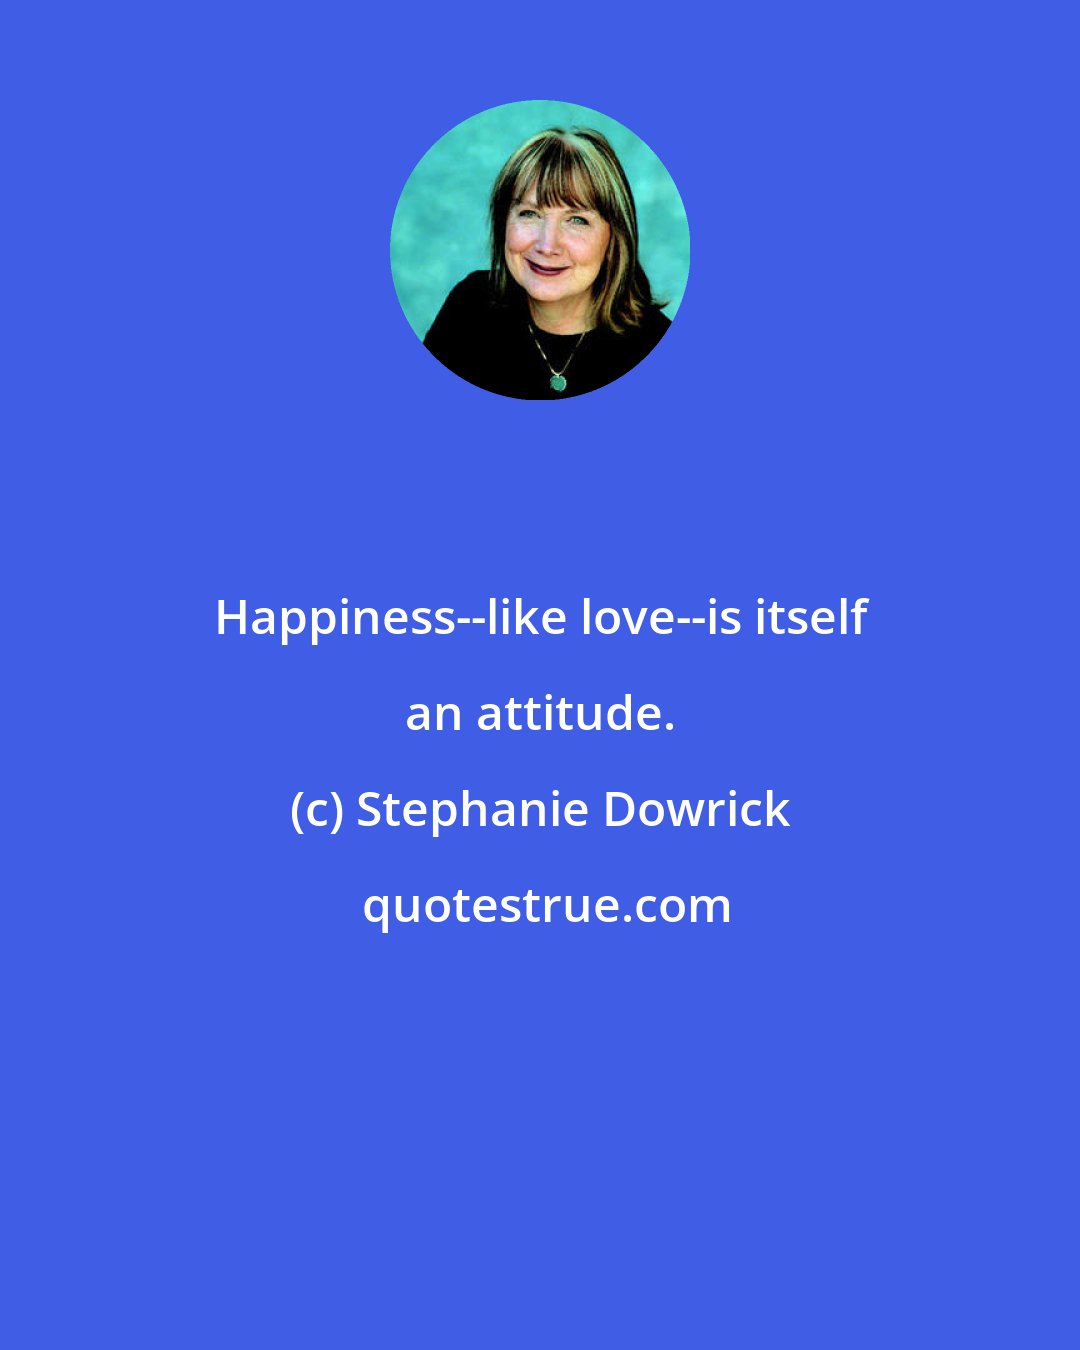 Stephanie Dowrick: Happiness--like love--is itself an attitude.